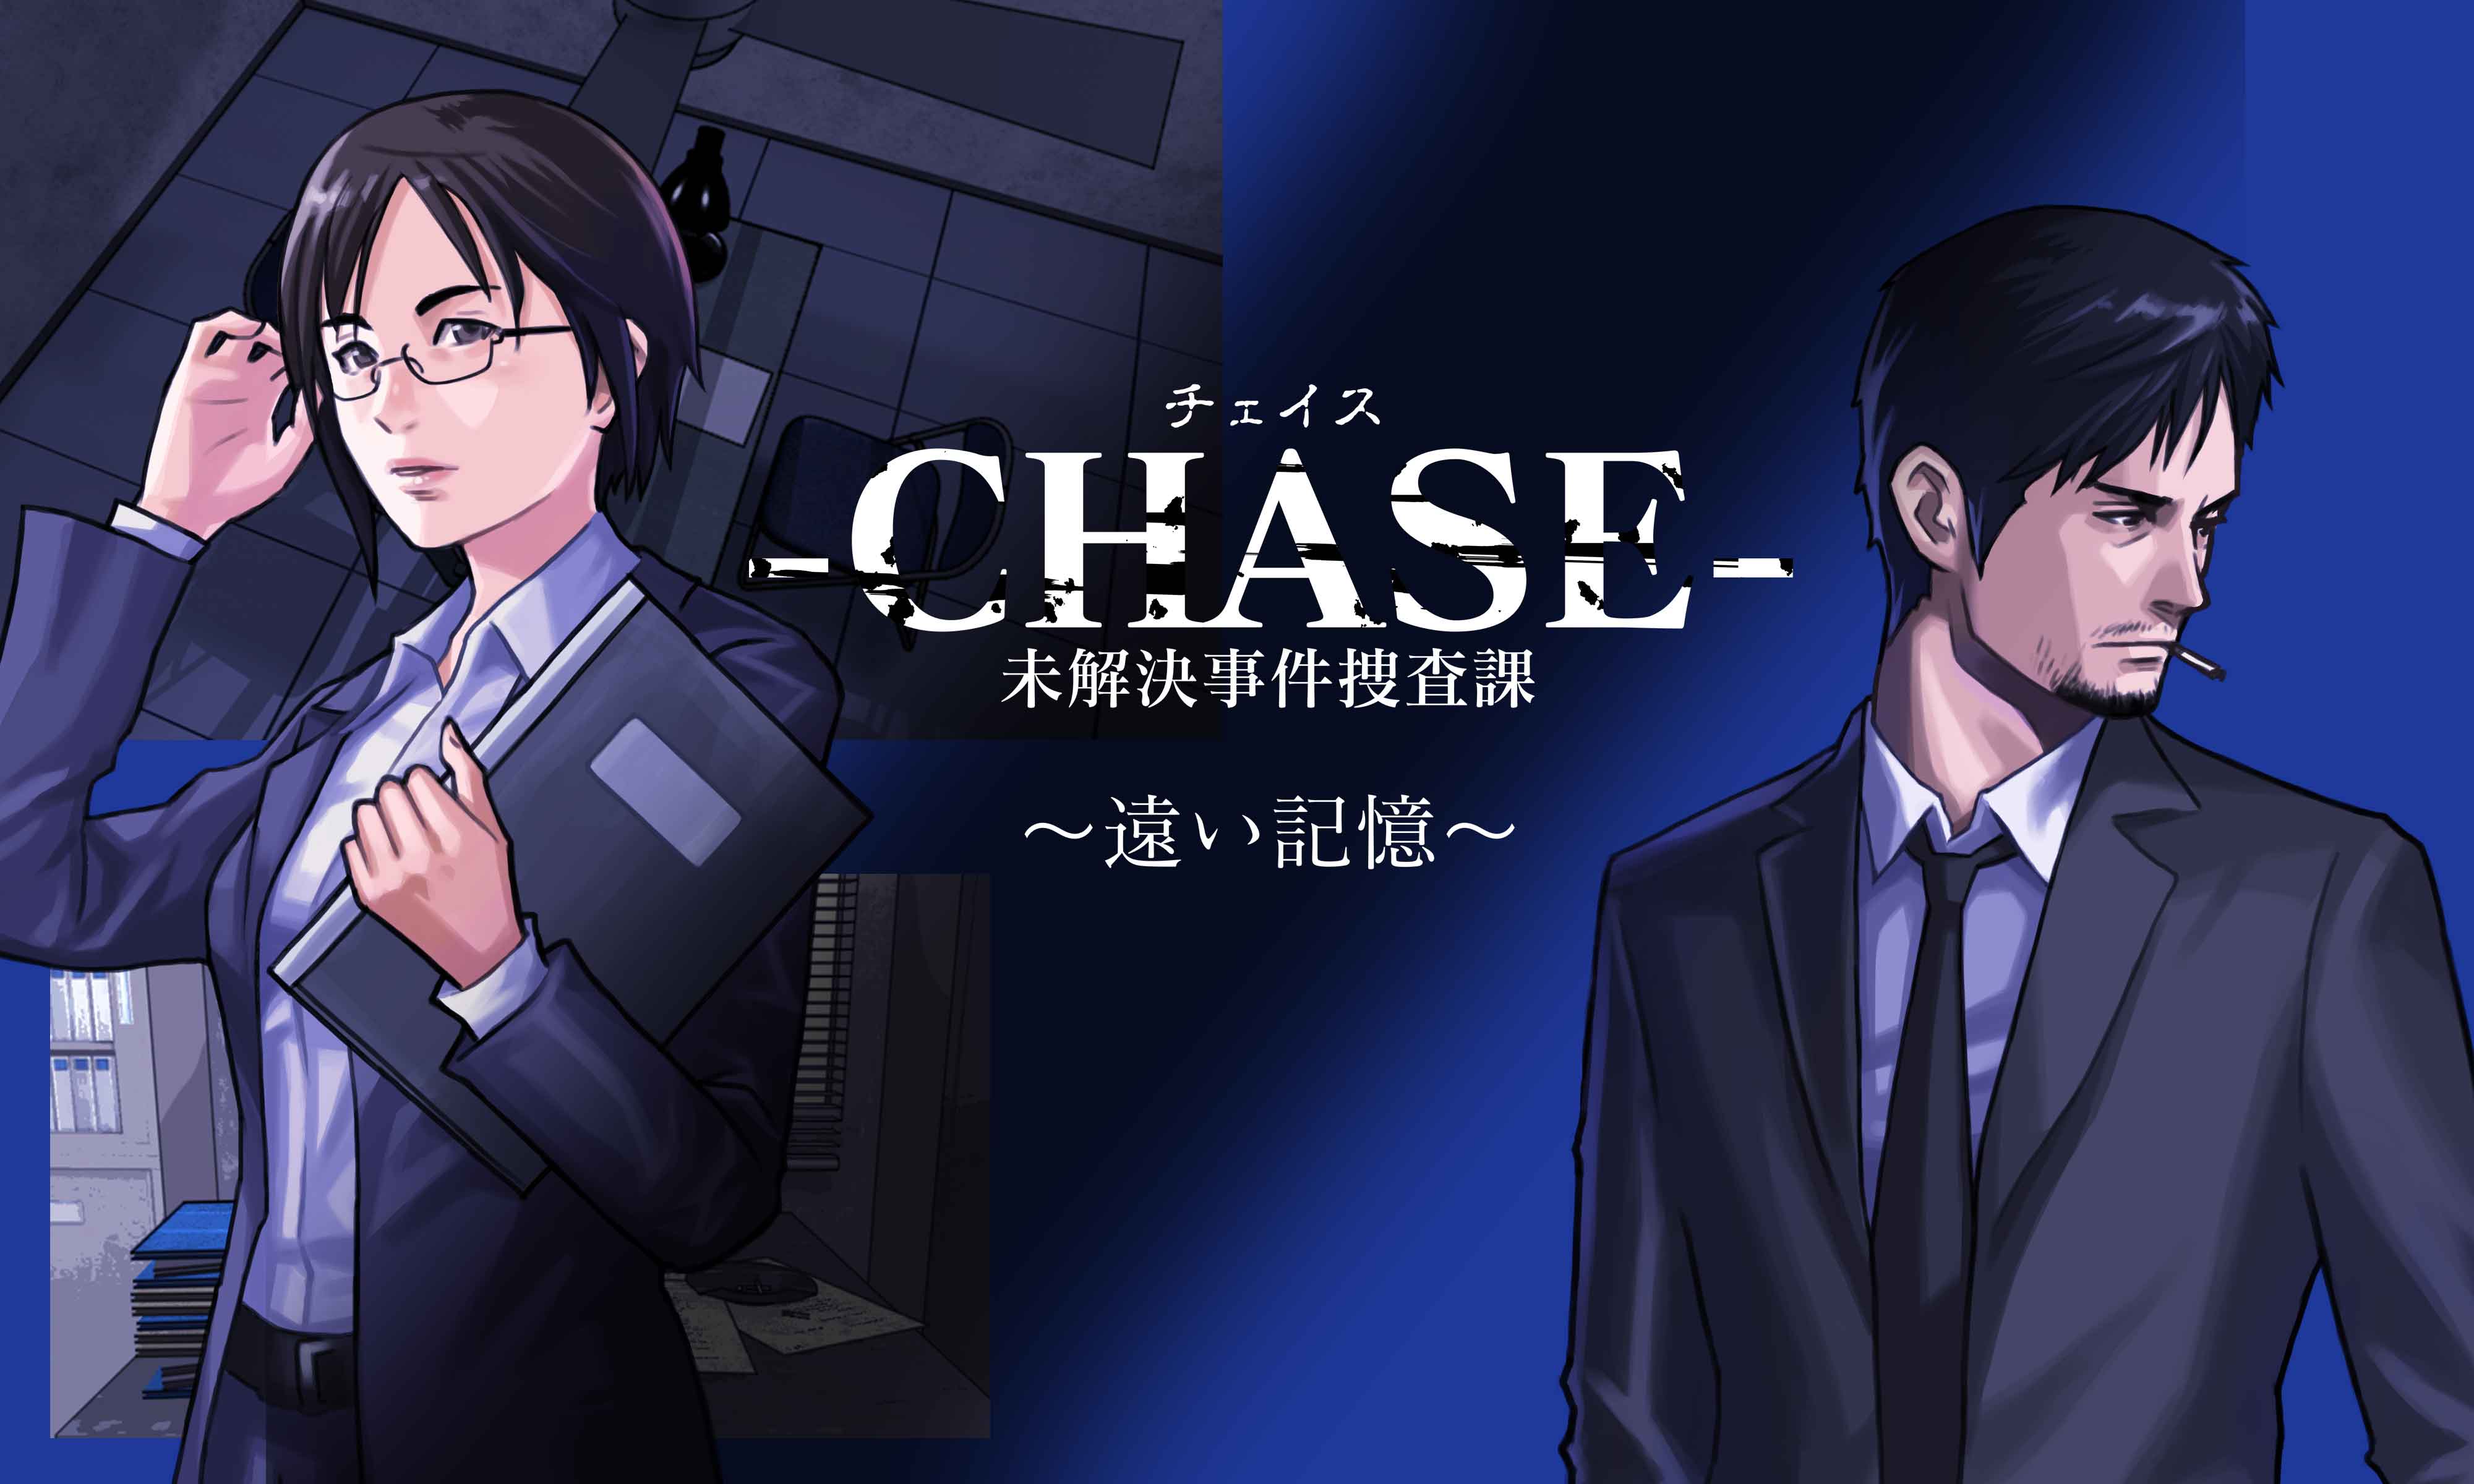 Новелла детектив. Unsolved Case игра. Chase game. Любовный детектив новелла.